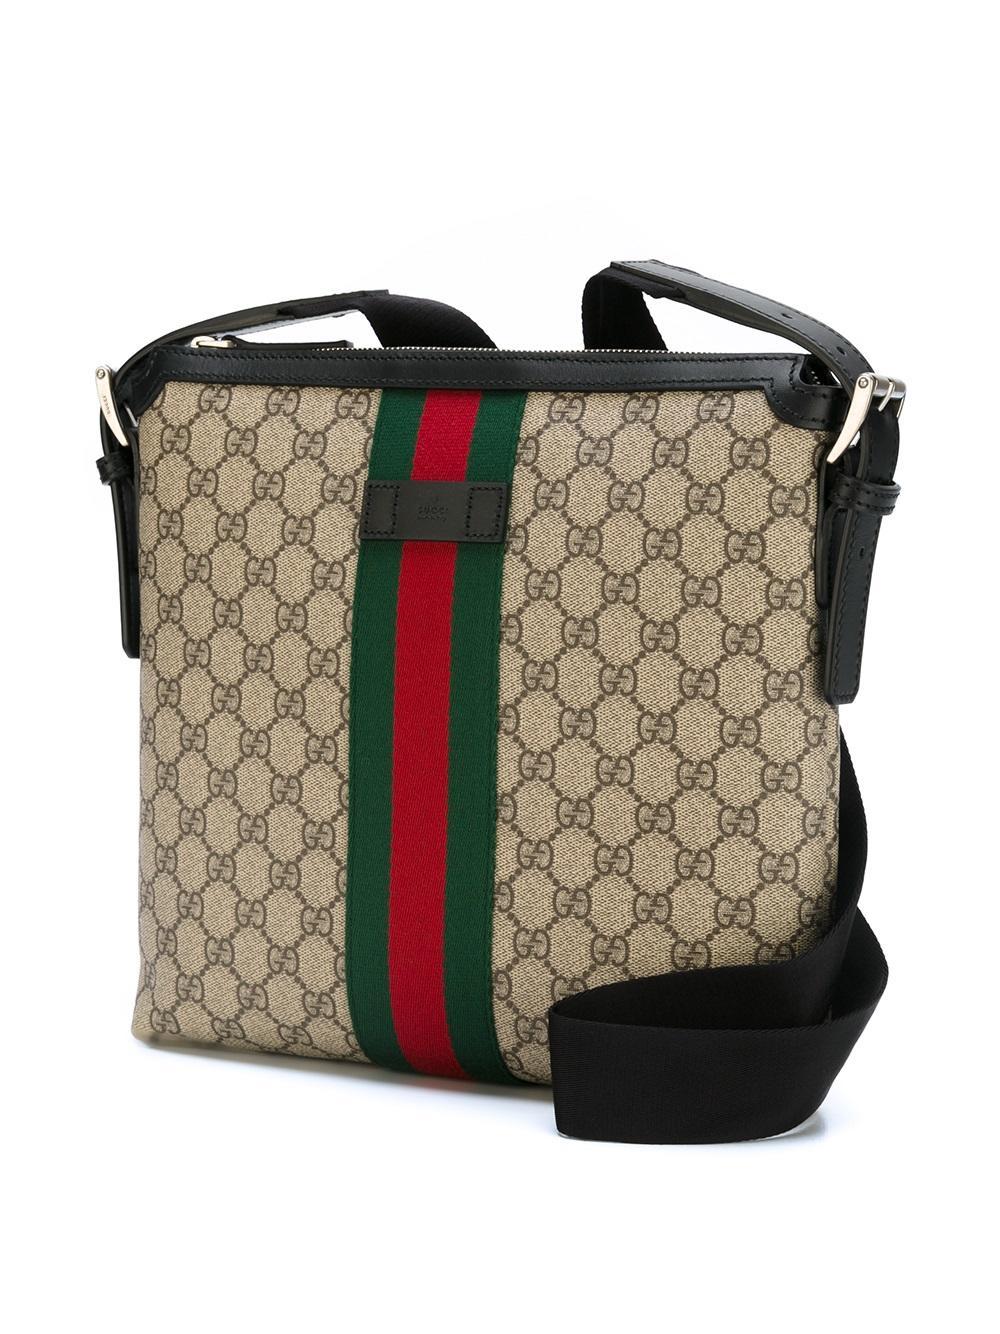 Gucci Gg Supreme Messenger Bag Dhgate | Paul Smith